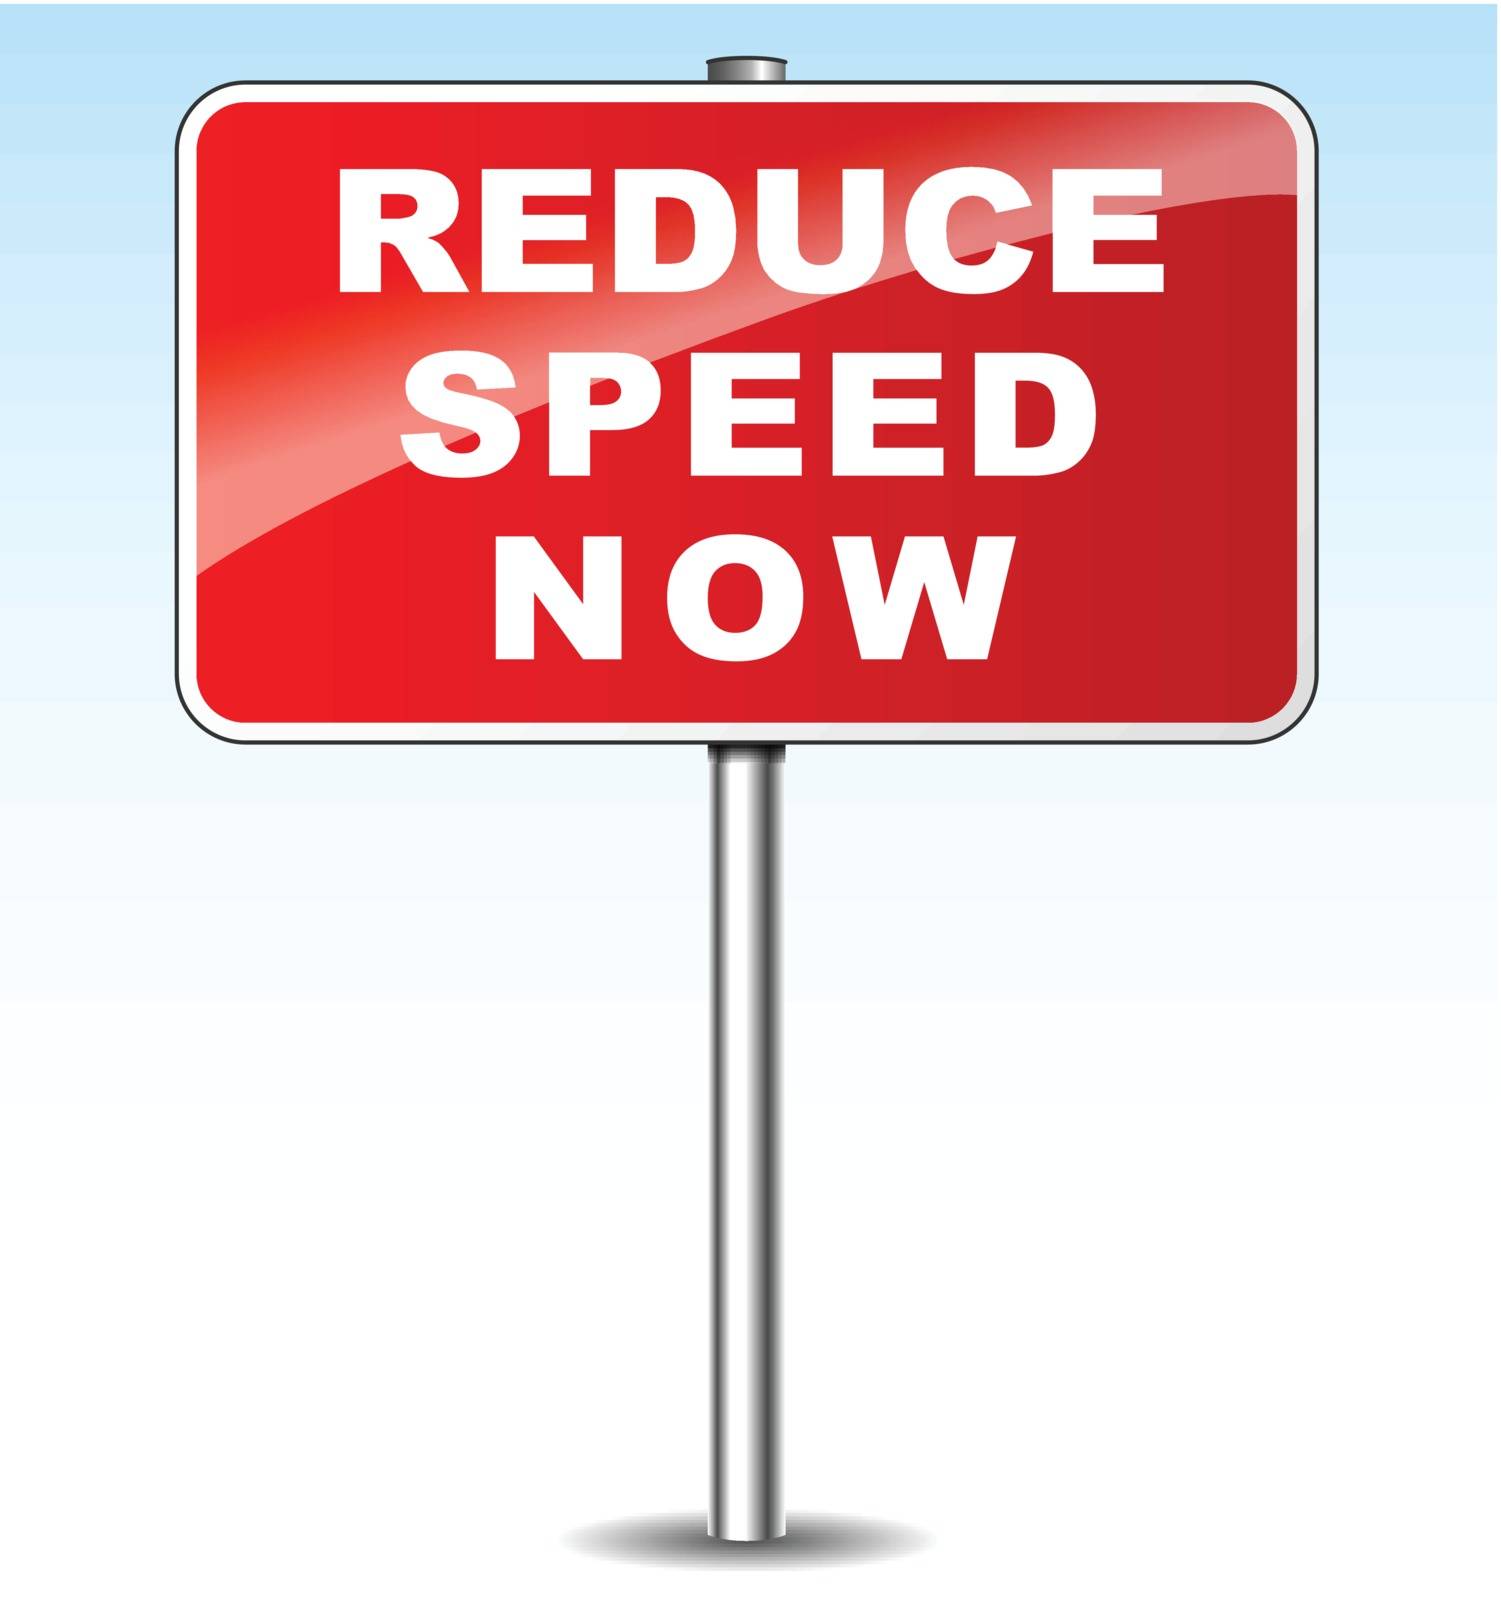 reduce speed now by nickylarson974